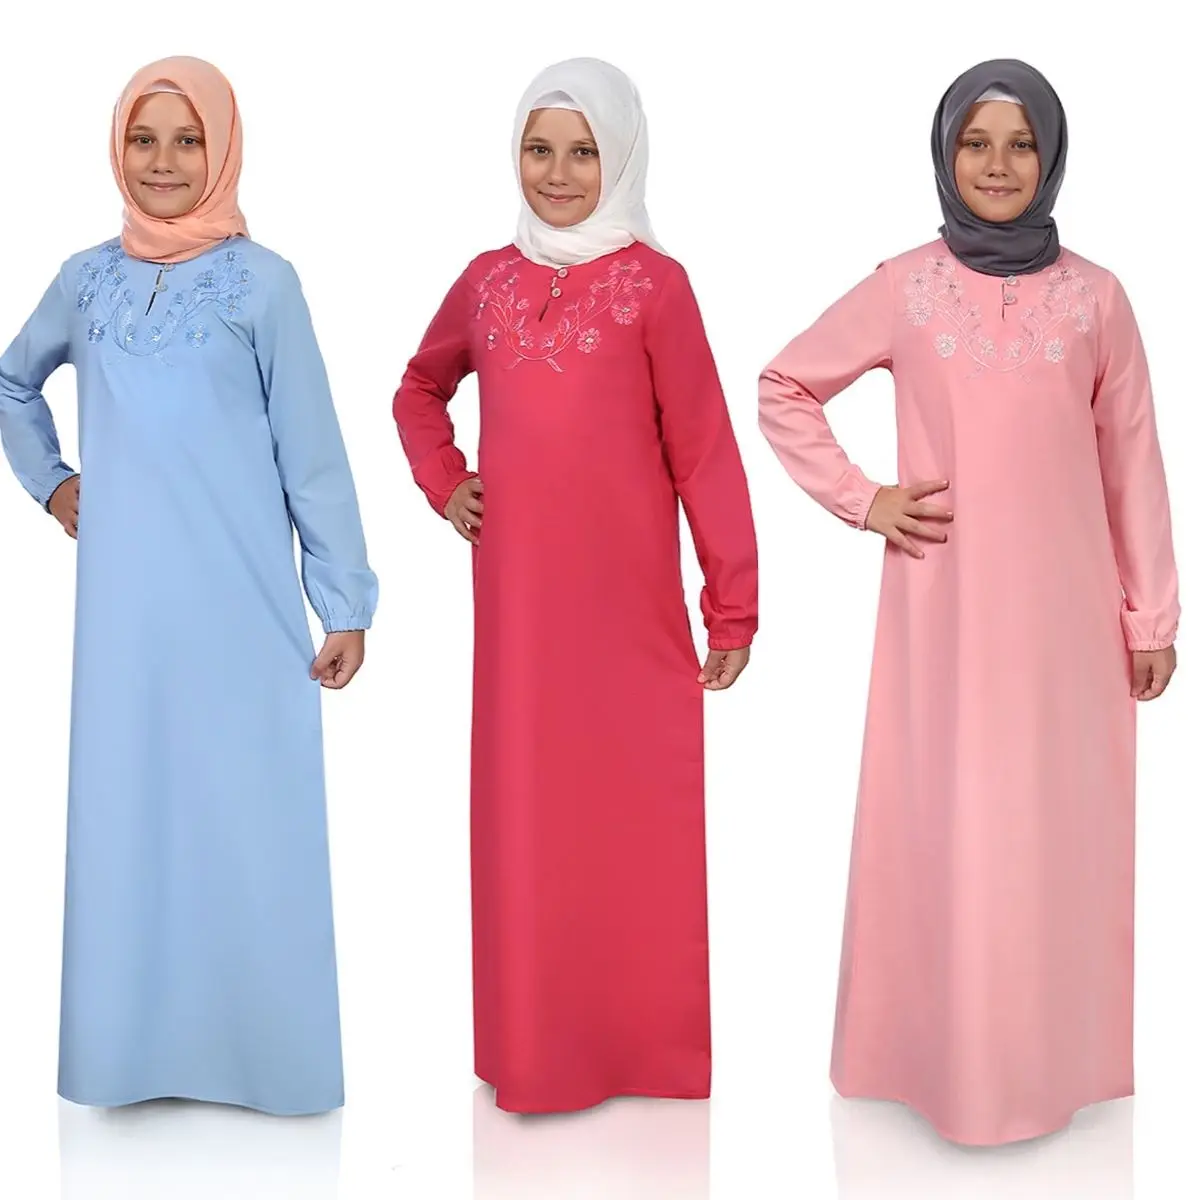 Embroidered Children's Dress Long Sleeve Crew Neck Elastic Seasonal Casual Women's Hijab Clothing Muslim  Fashion  Islam Turkey